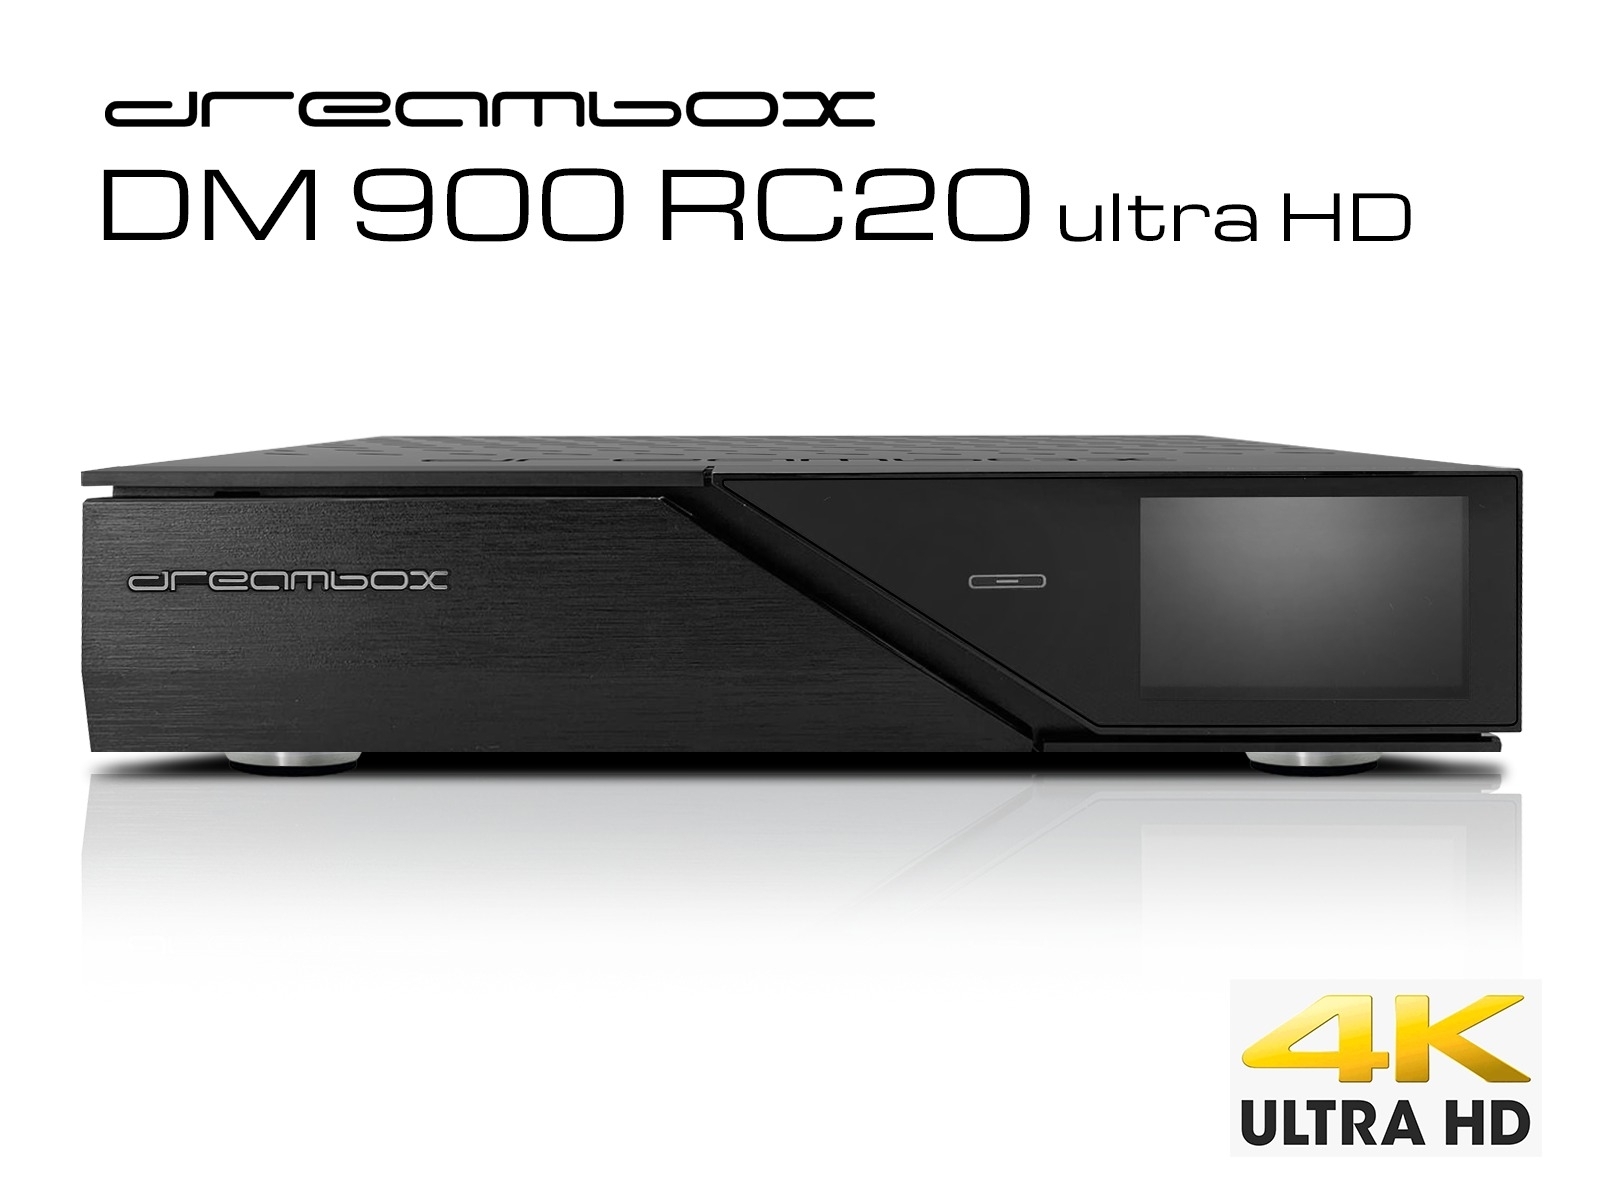 Dreambox DM900 RC20 UHD 4K 1x DVB-S2X FBC MS Twin Tuner 500 GB HDD E2 Linux PVR Receiver